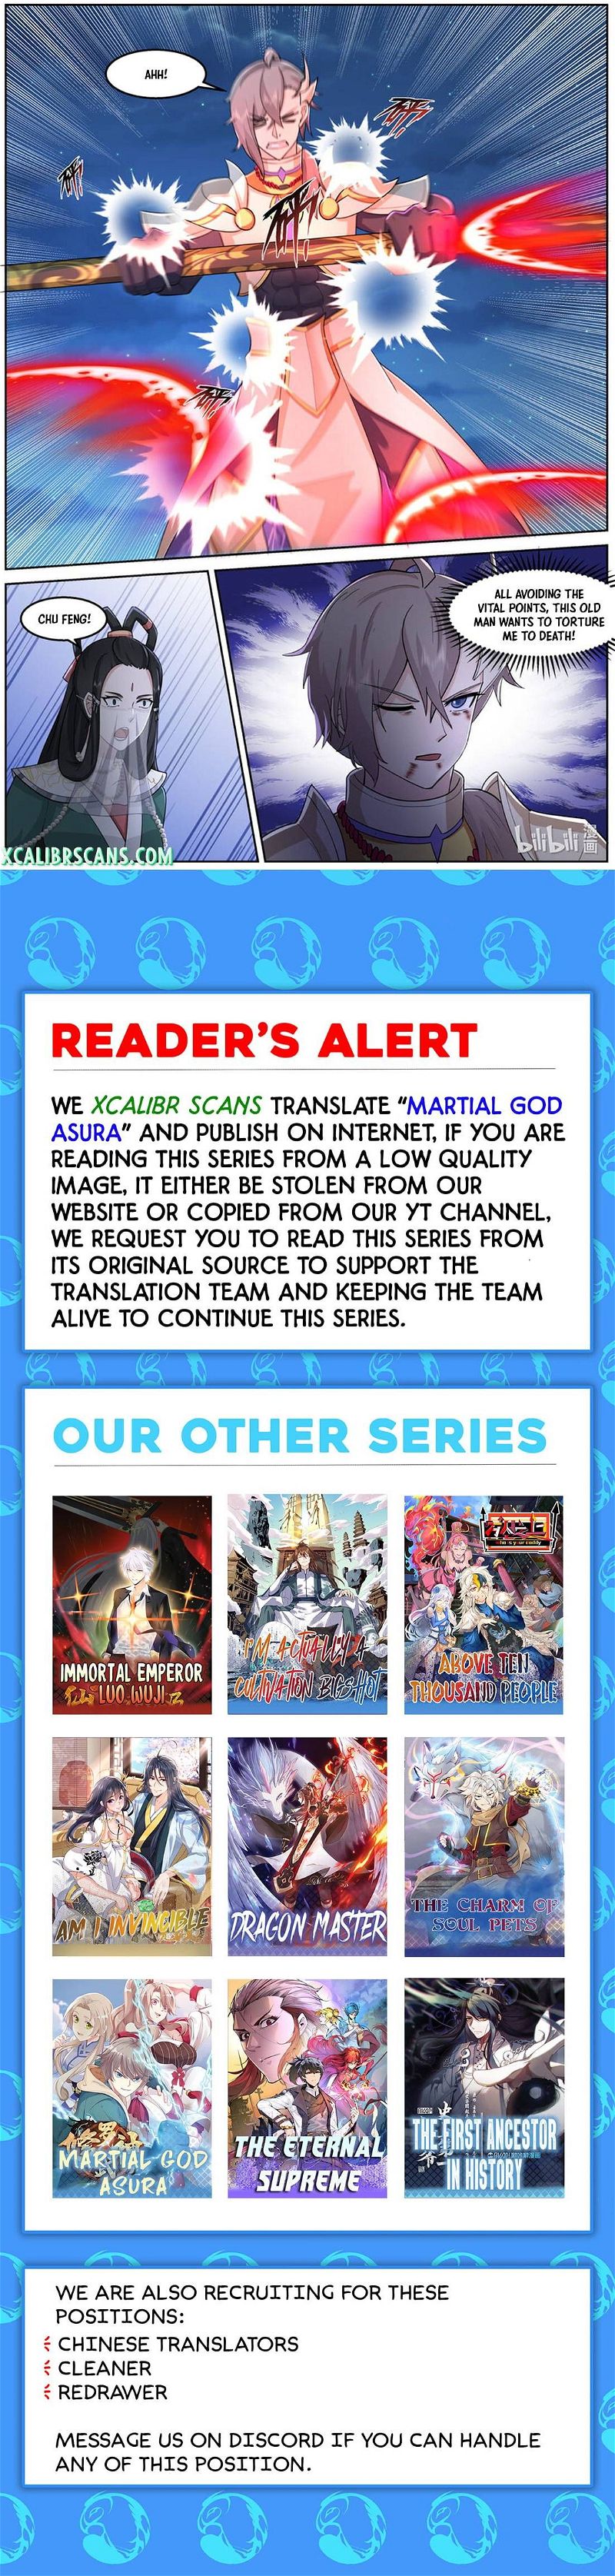 Martial God Asura Chapter 587 page 10